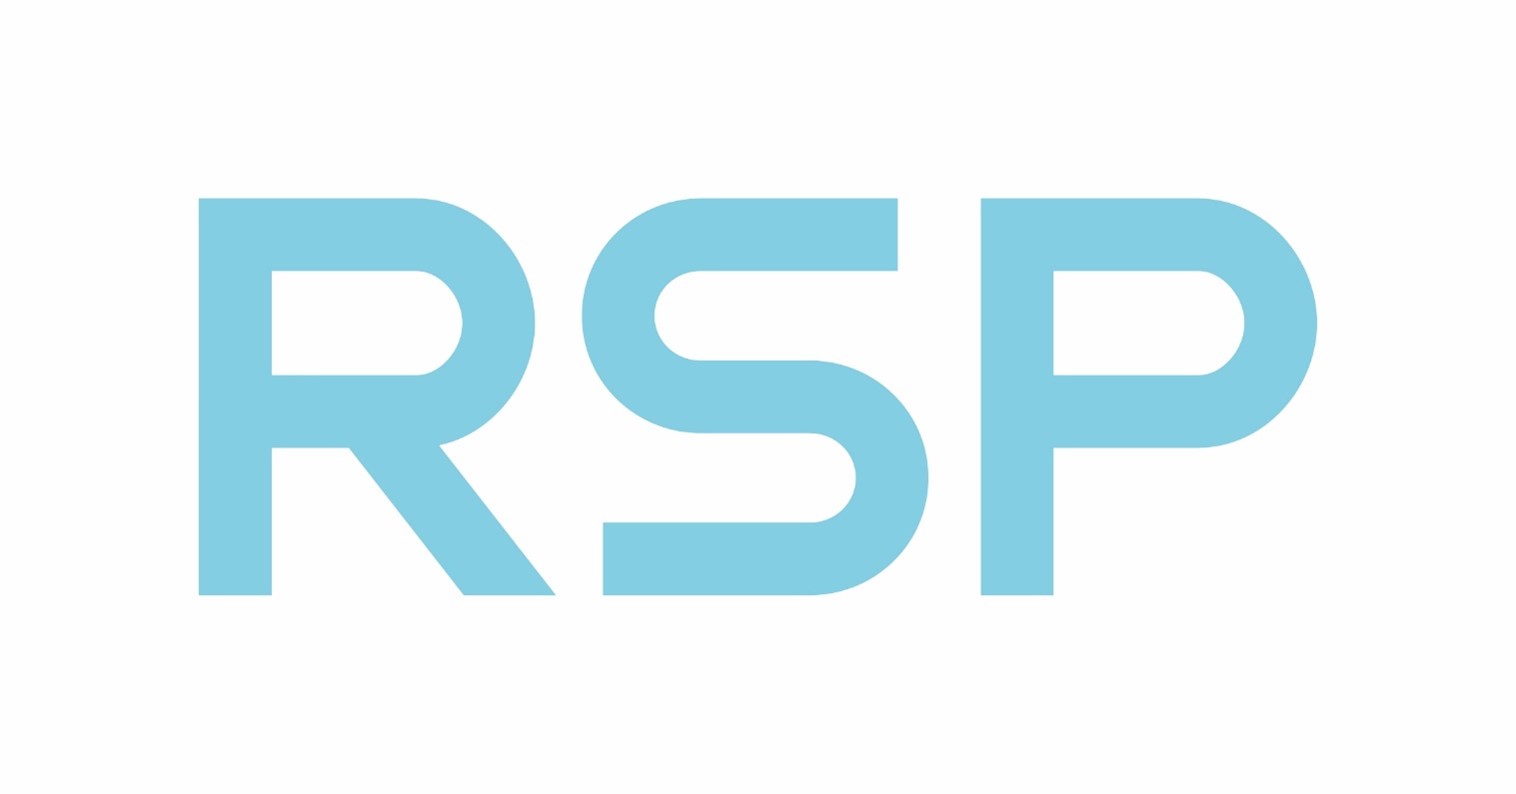 rsp logo